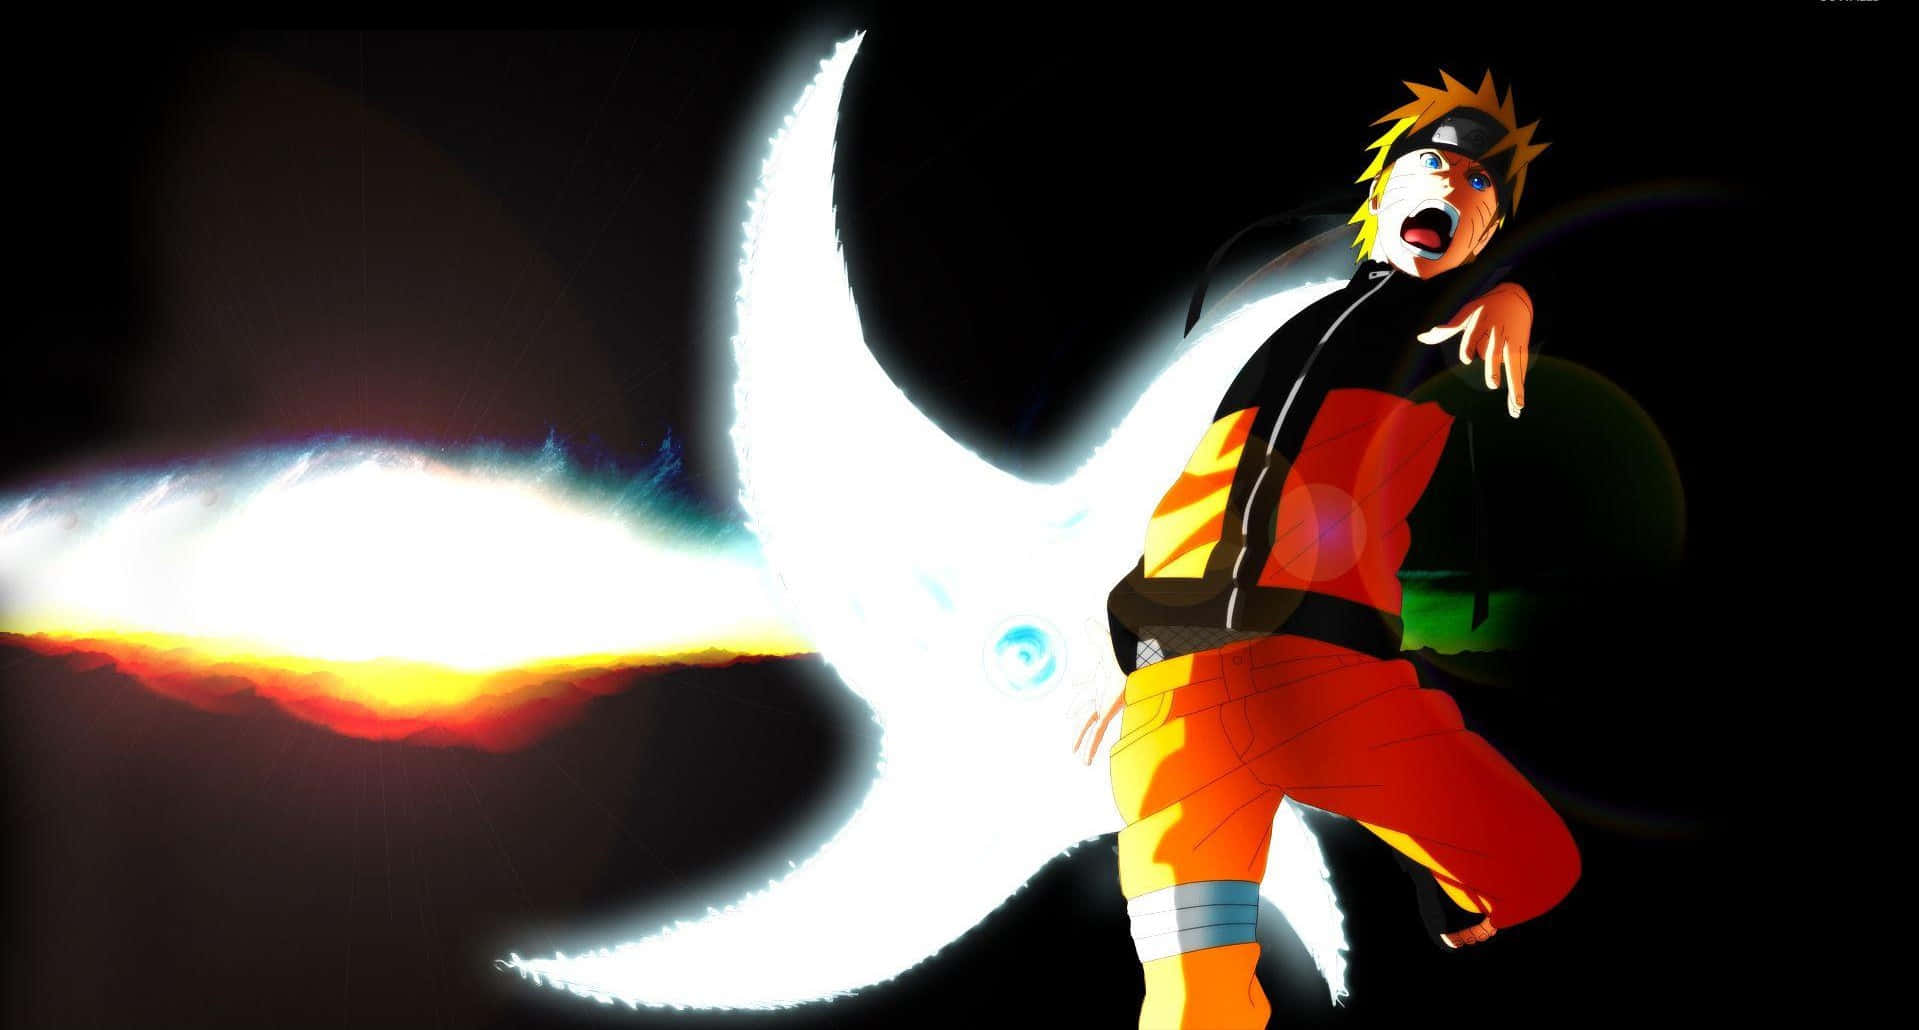 "#Rasengan - Unleashing the power of the legendary jutsu from Naruto" Wallpaper